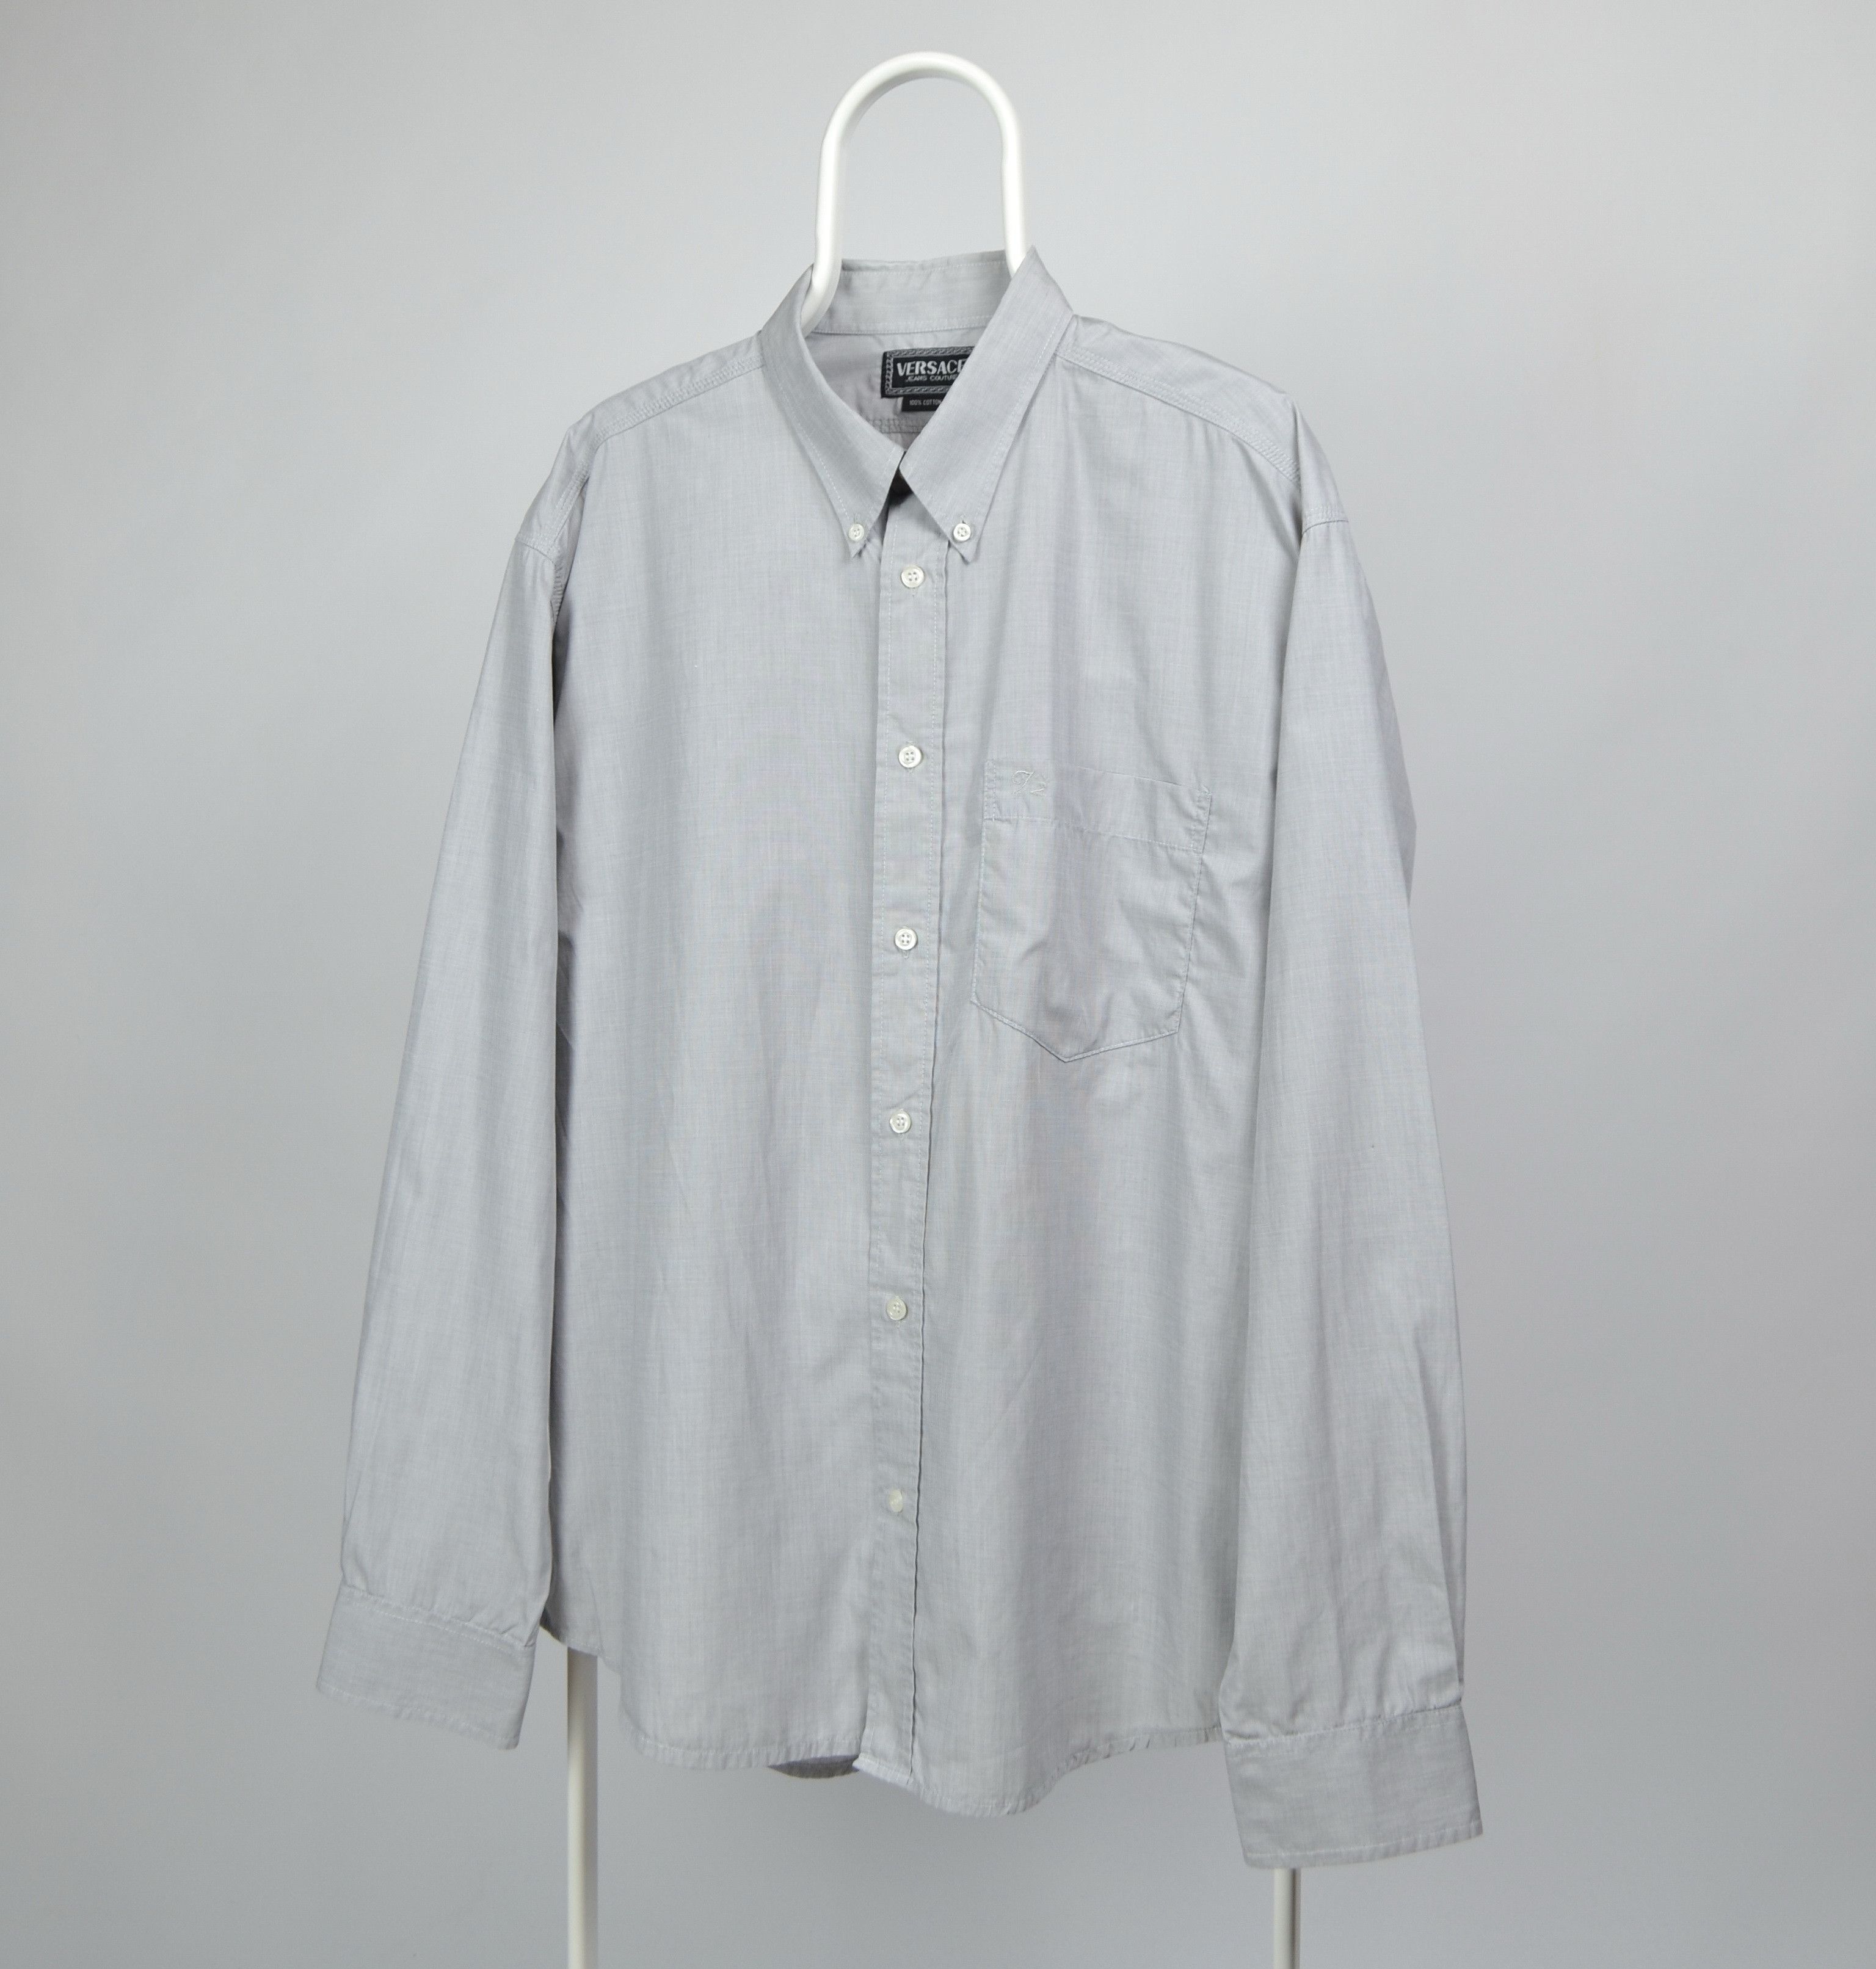 Vintage Vintage 90s VERSACE Grey Shirt | Grailed